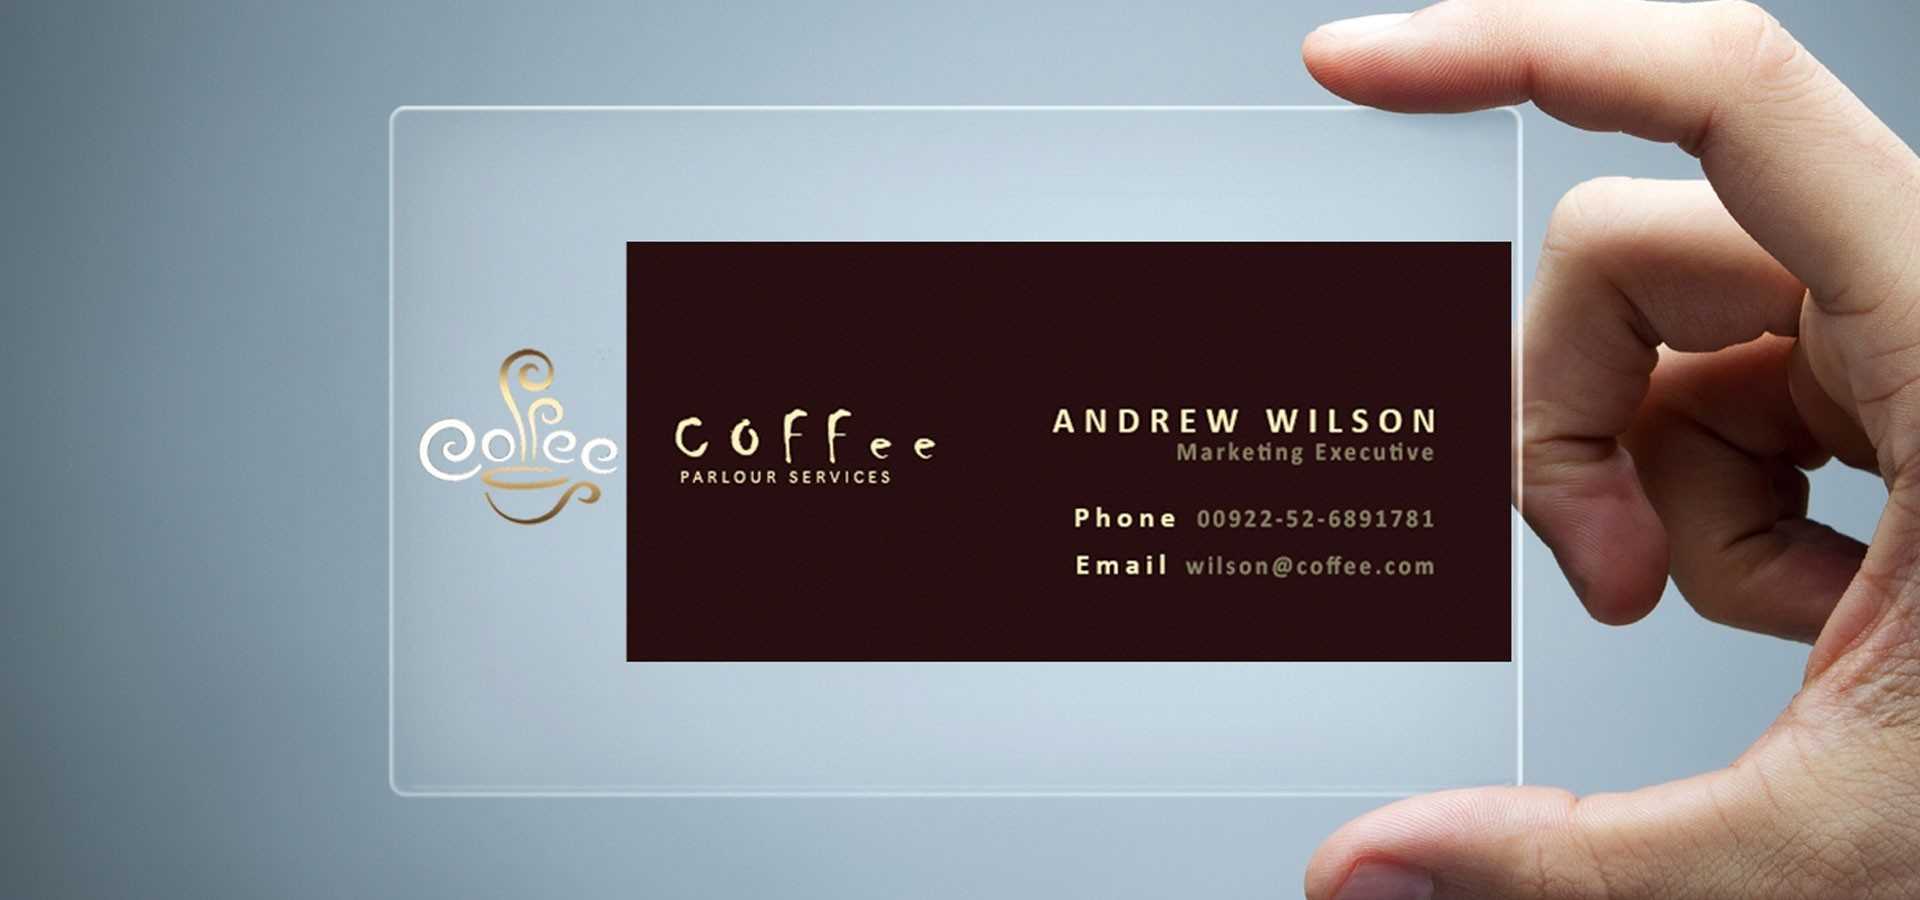 021 Trancprnt Business Card Template Ideas Construction With Coffee Business Card Template Free